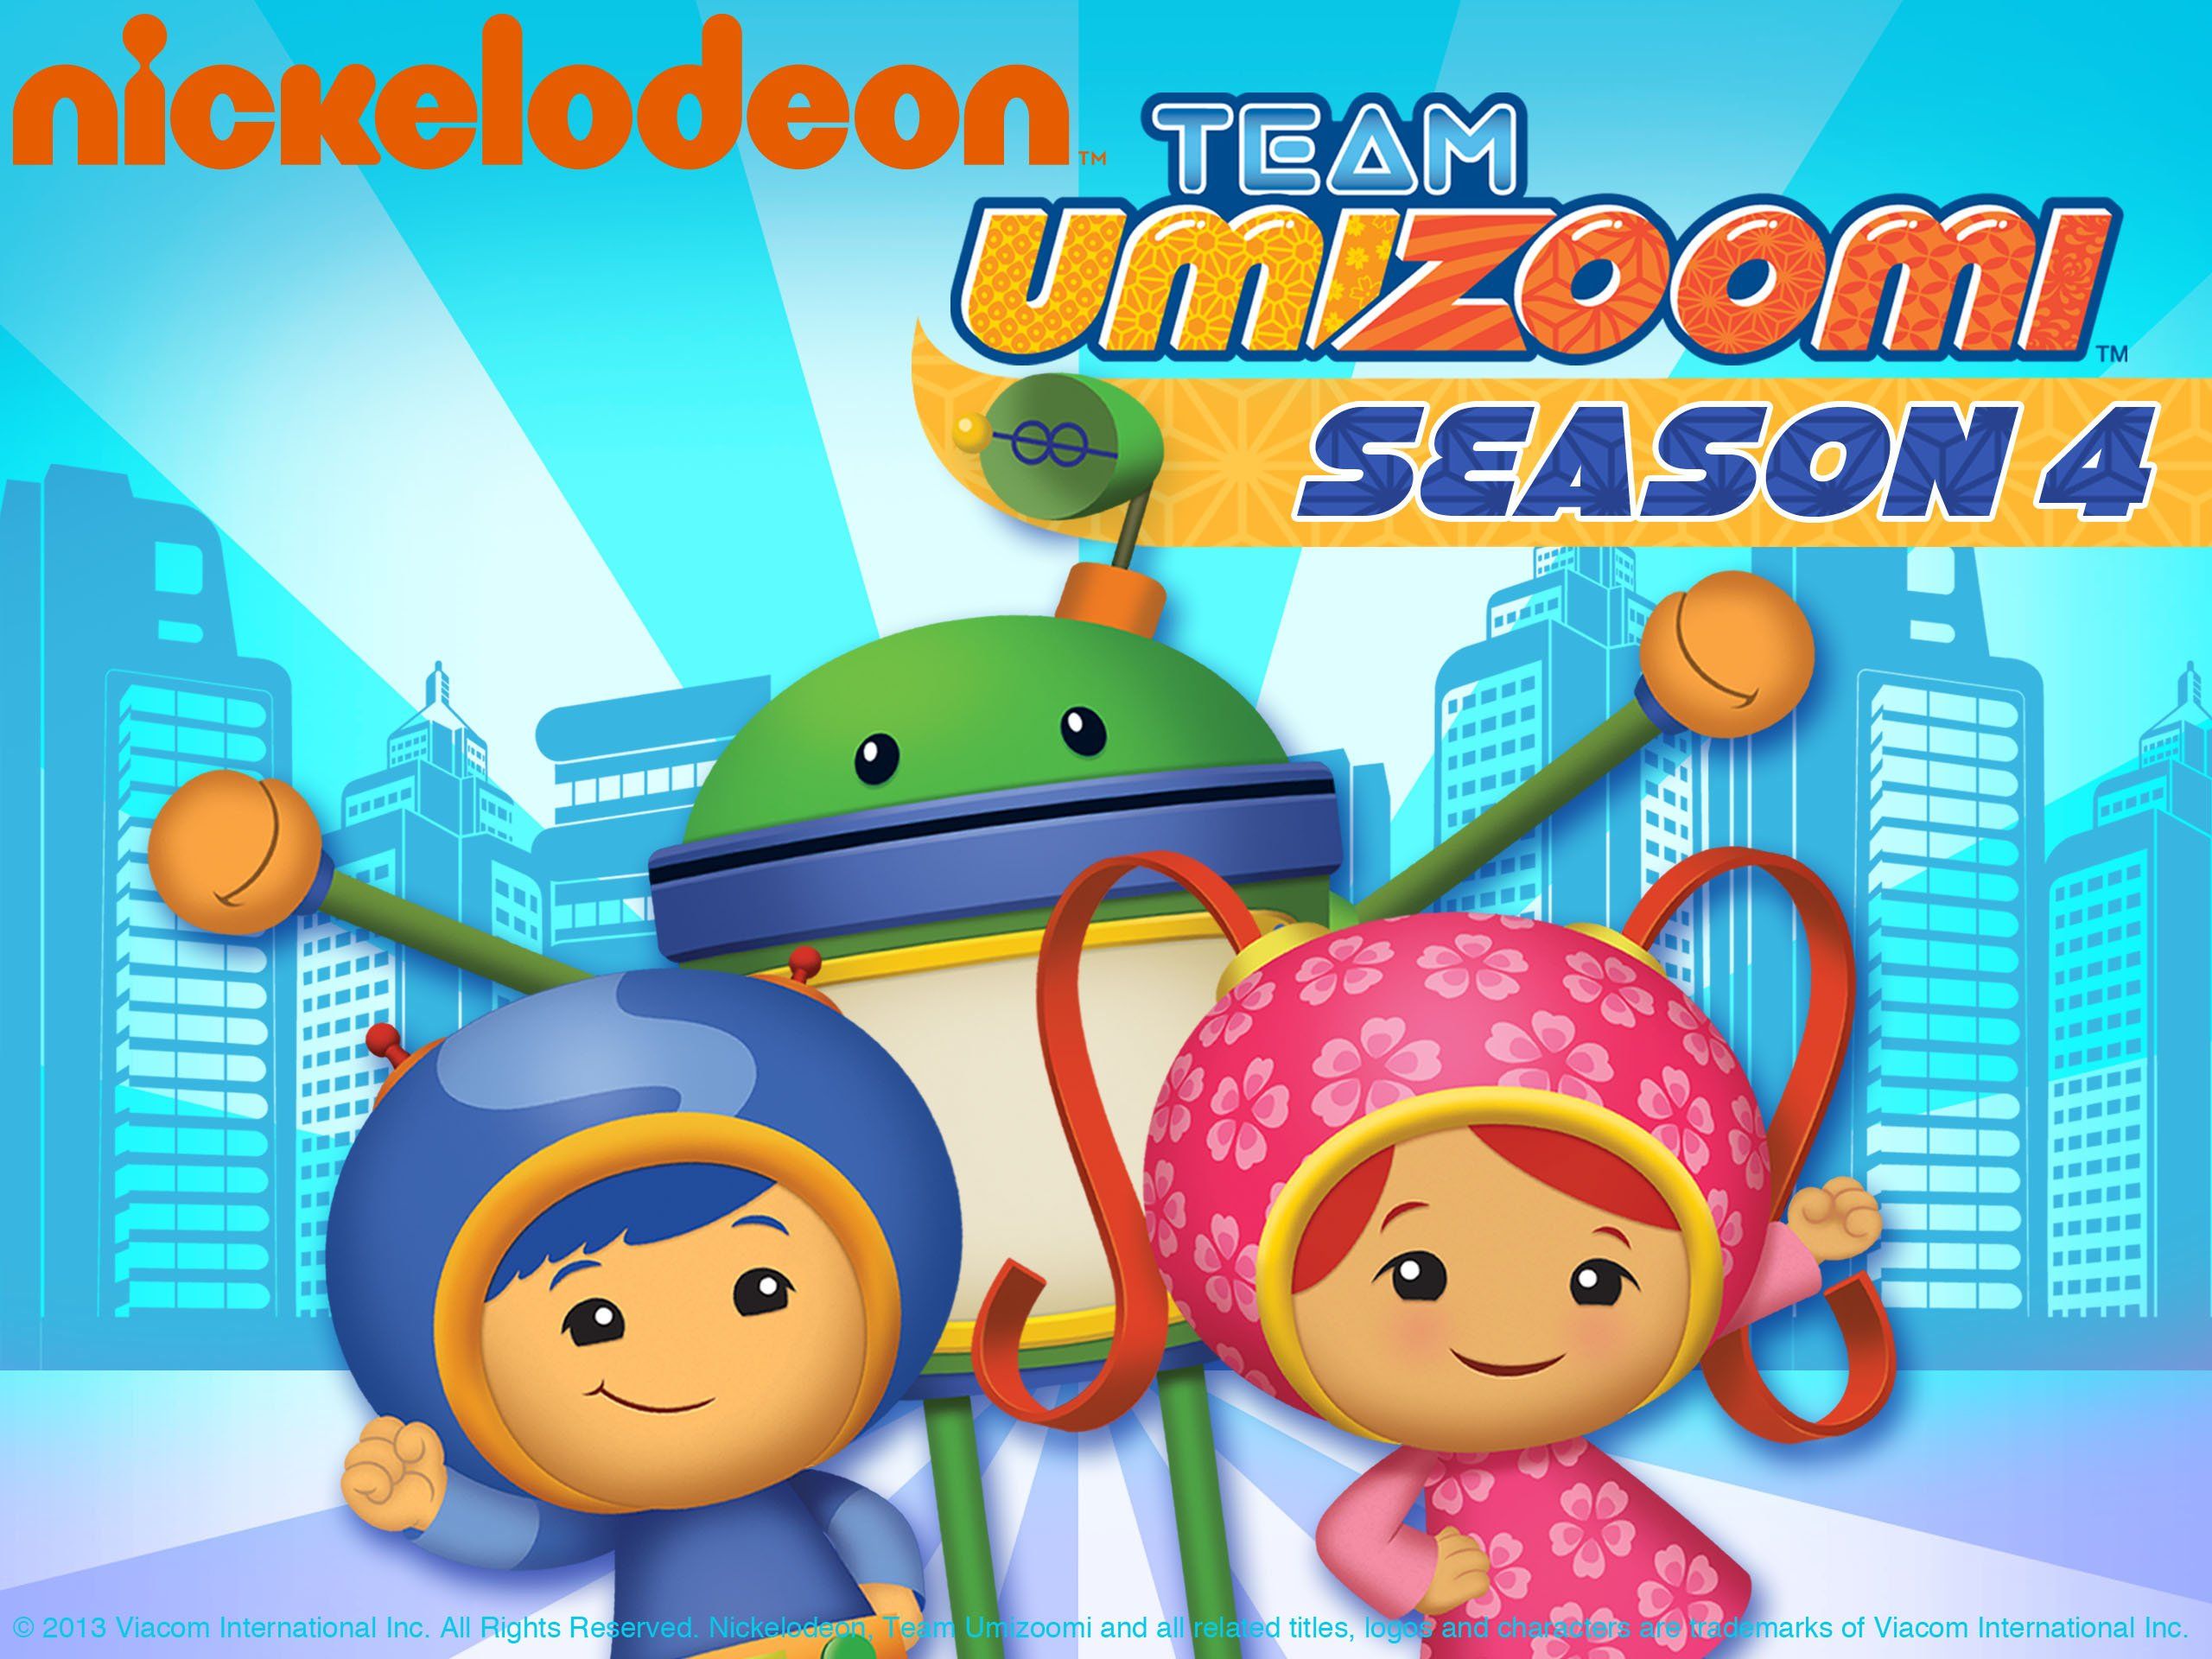 Watch Team Umizoomi Season 4amazon.com